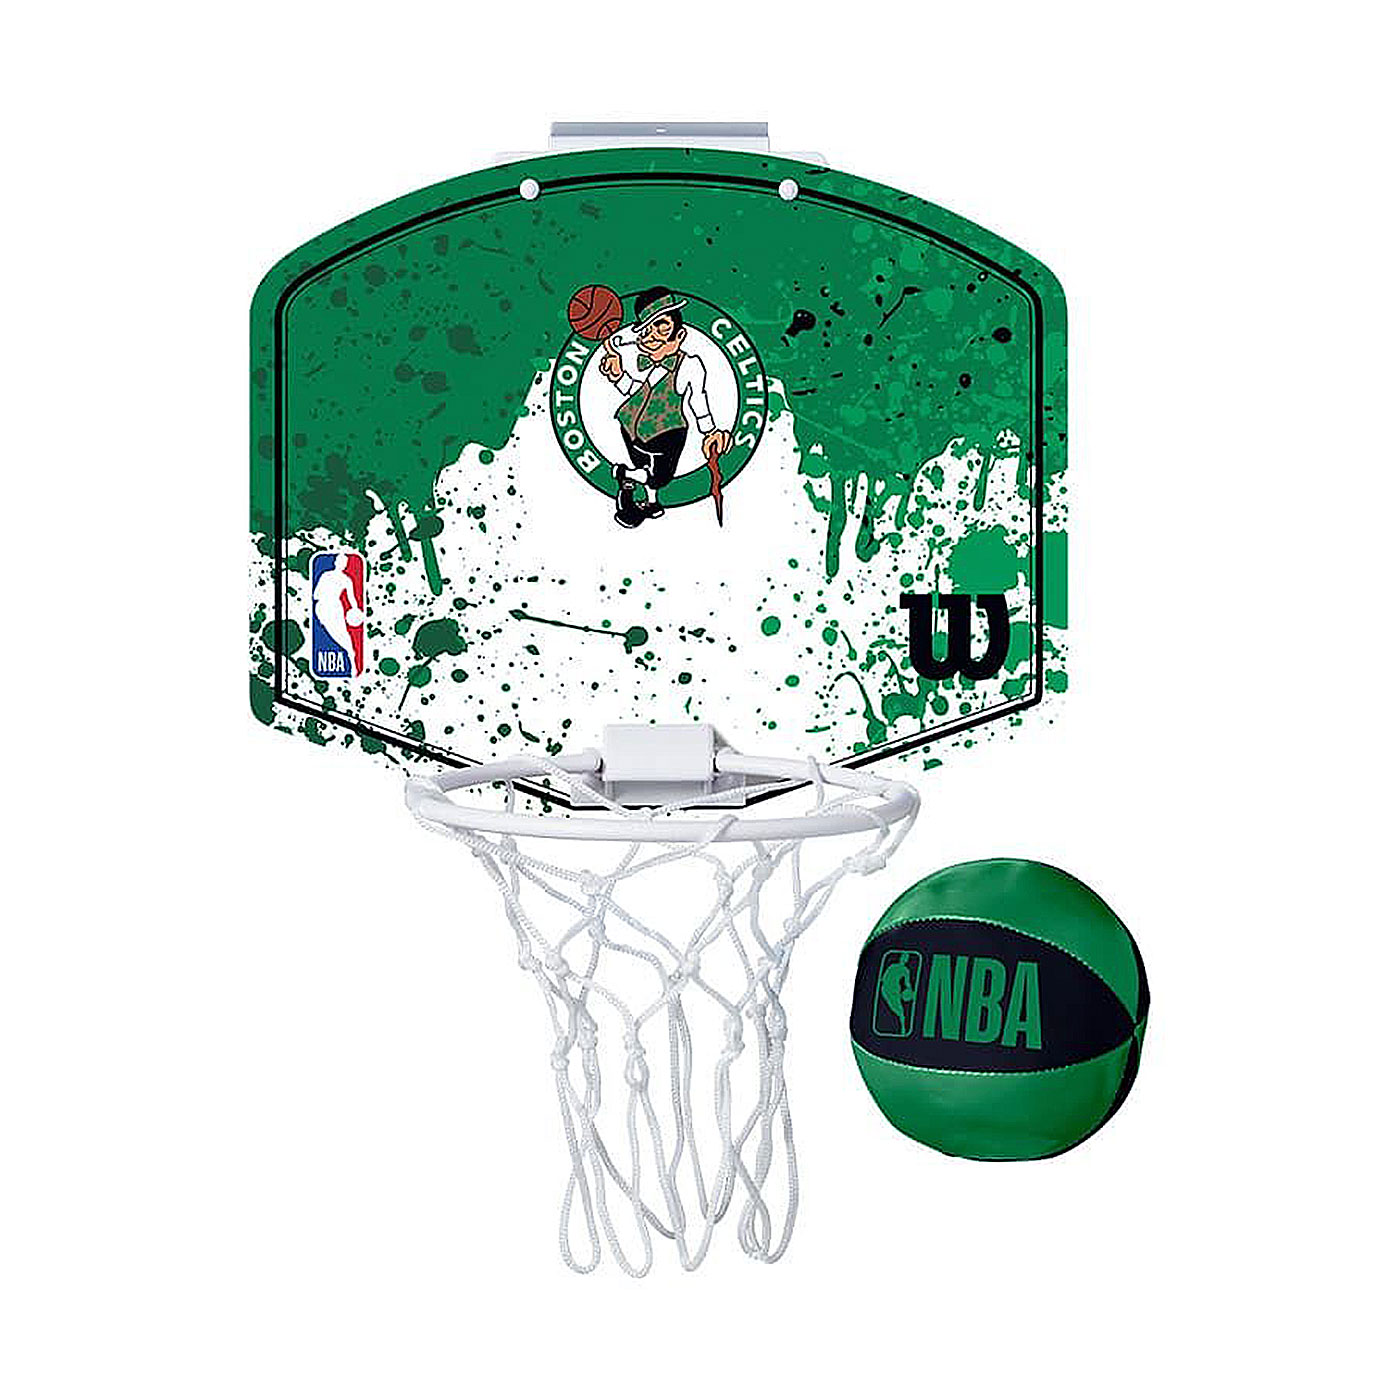 WILSON NBA 迷你籃板 21' 賽爾蒂克隊 (含小球)  WTBA1302BOS - 綠黑白